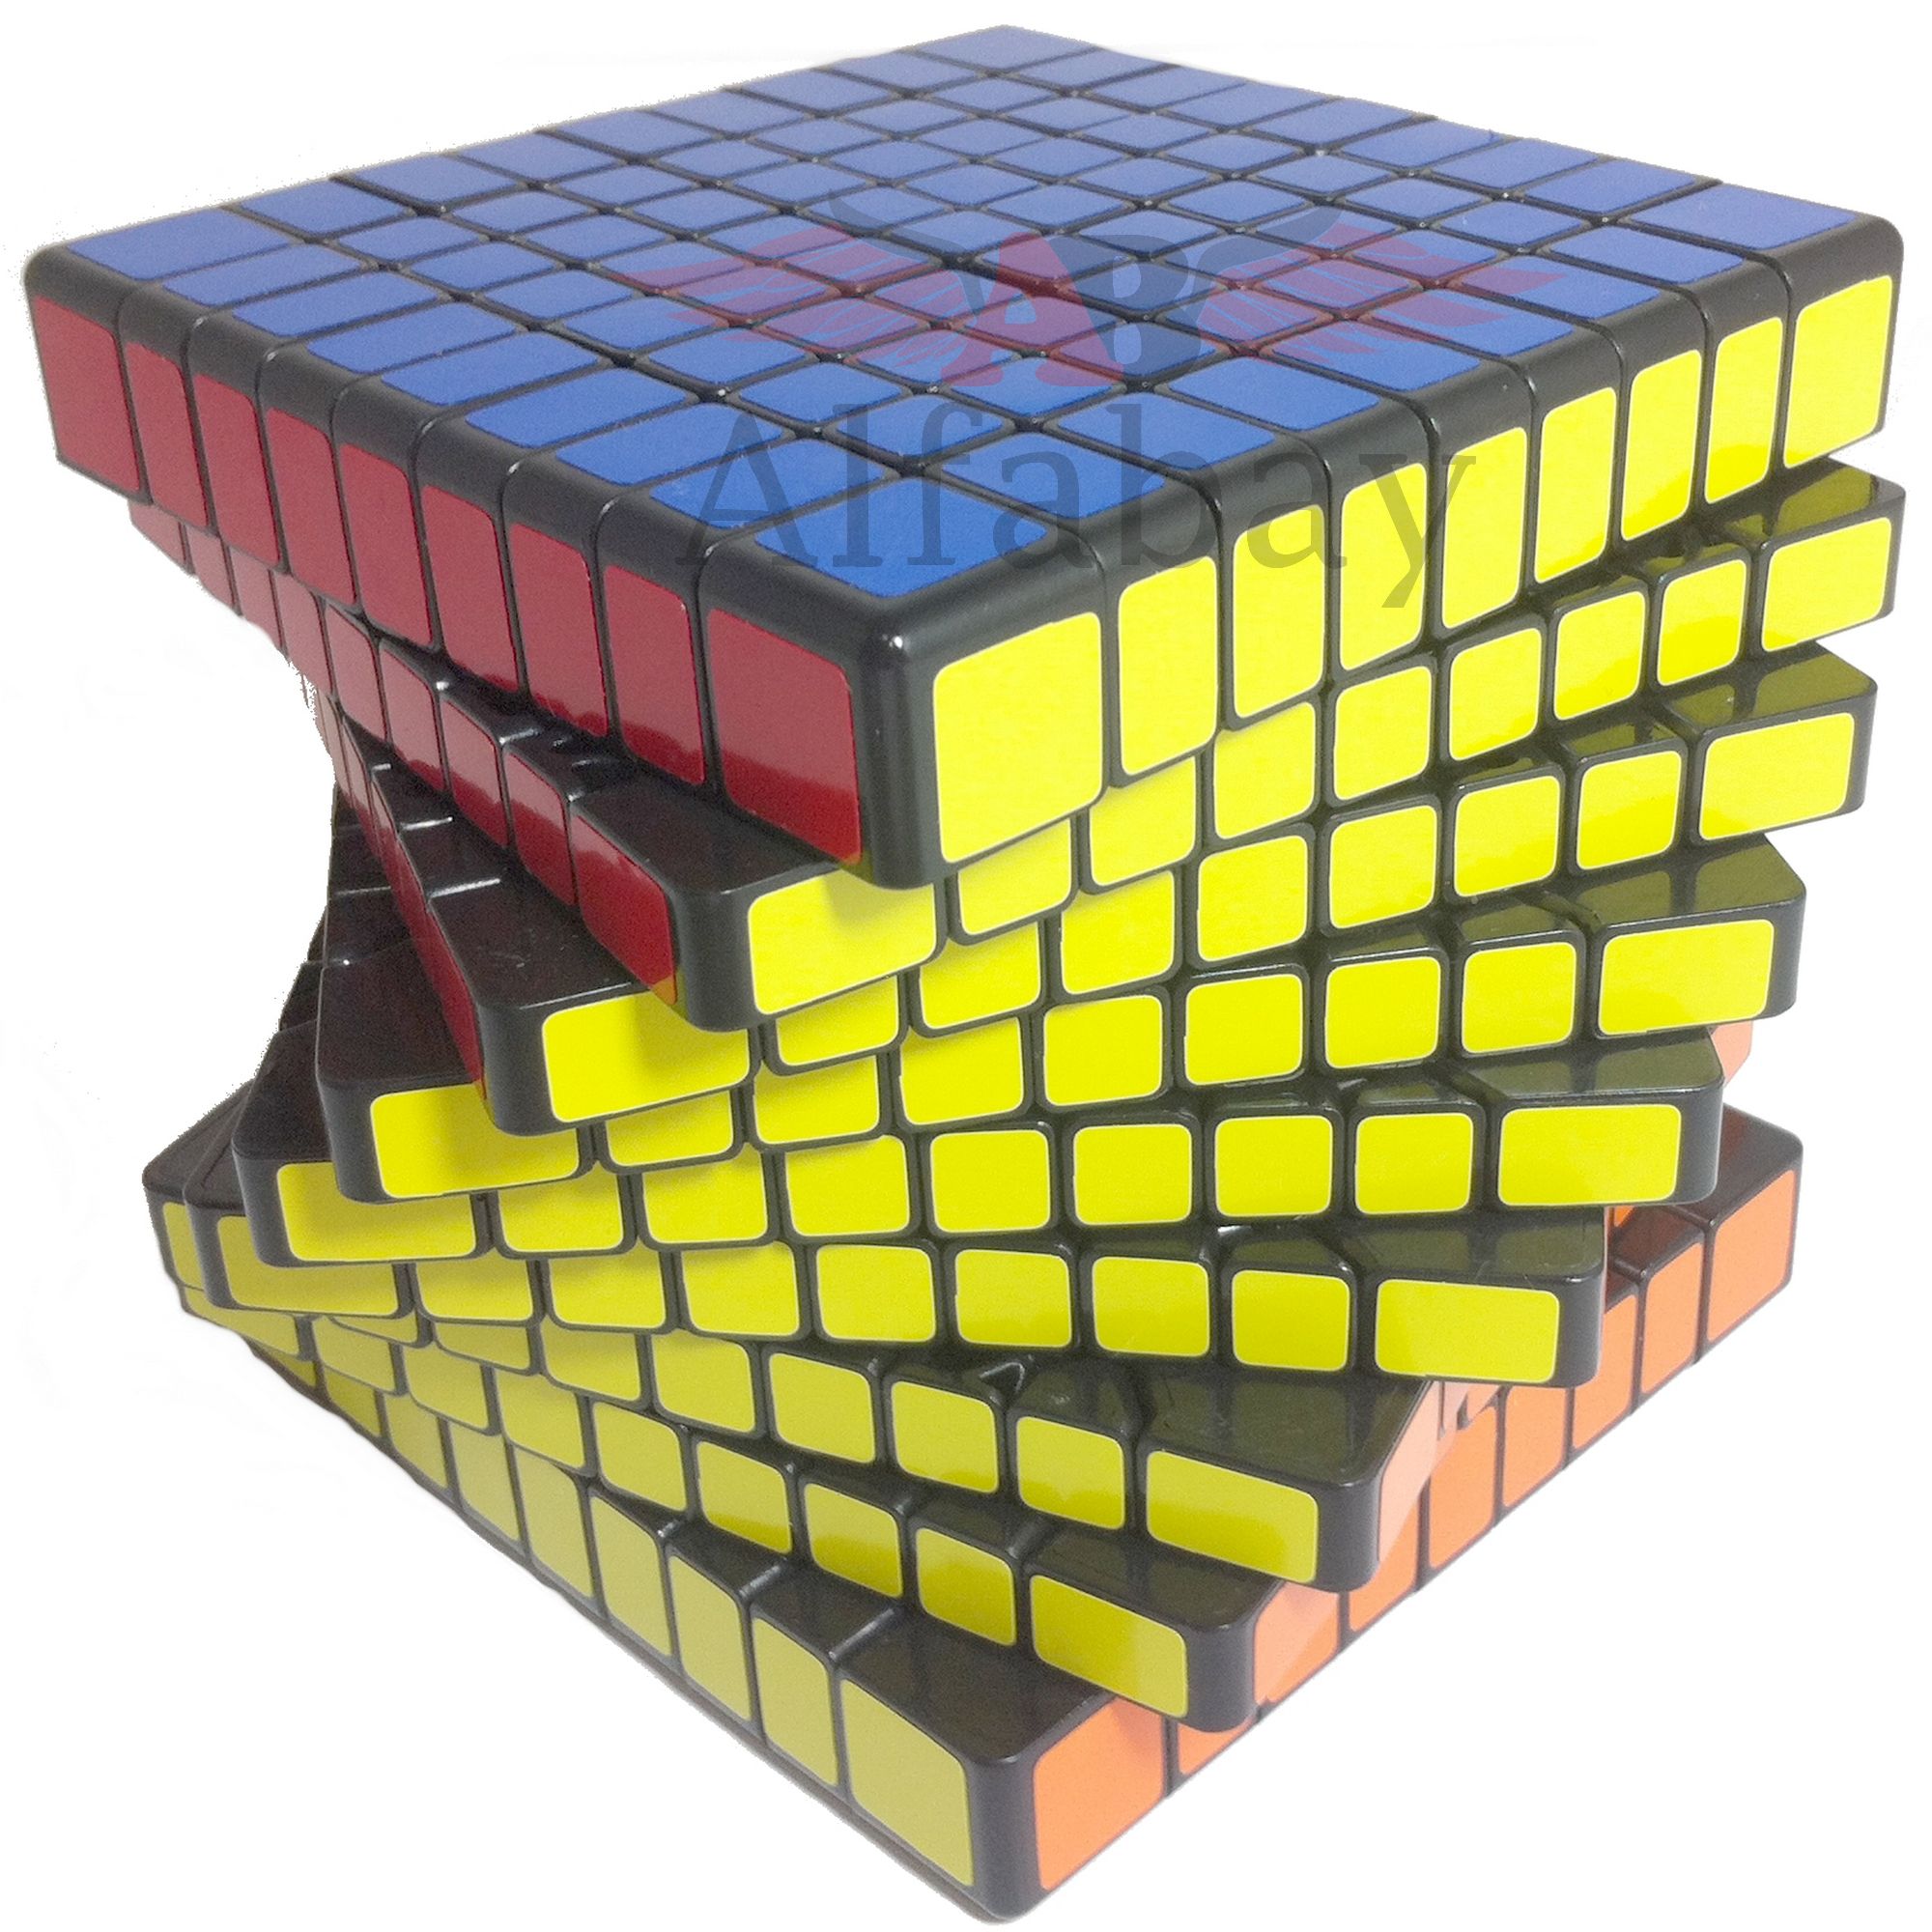 Cubo Mágico Profissional Magnético Mr. M Shengshou